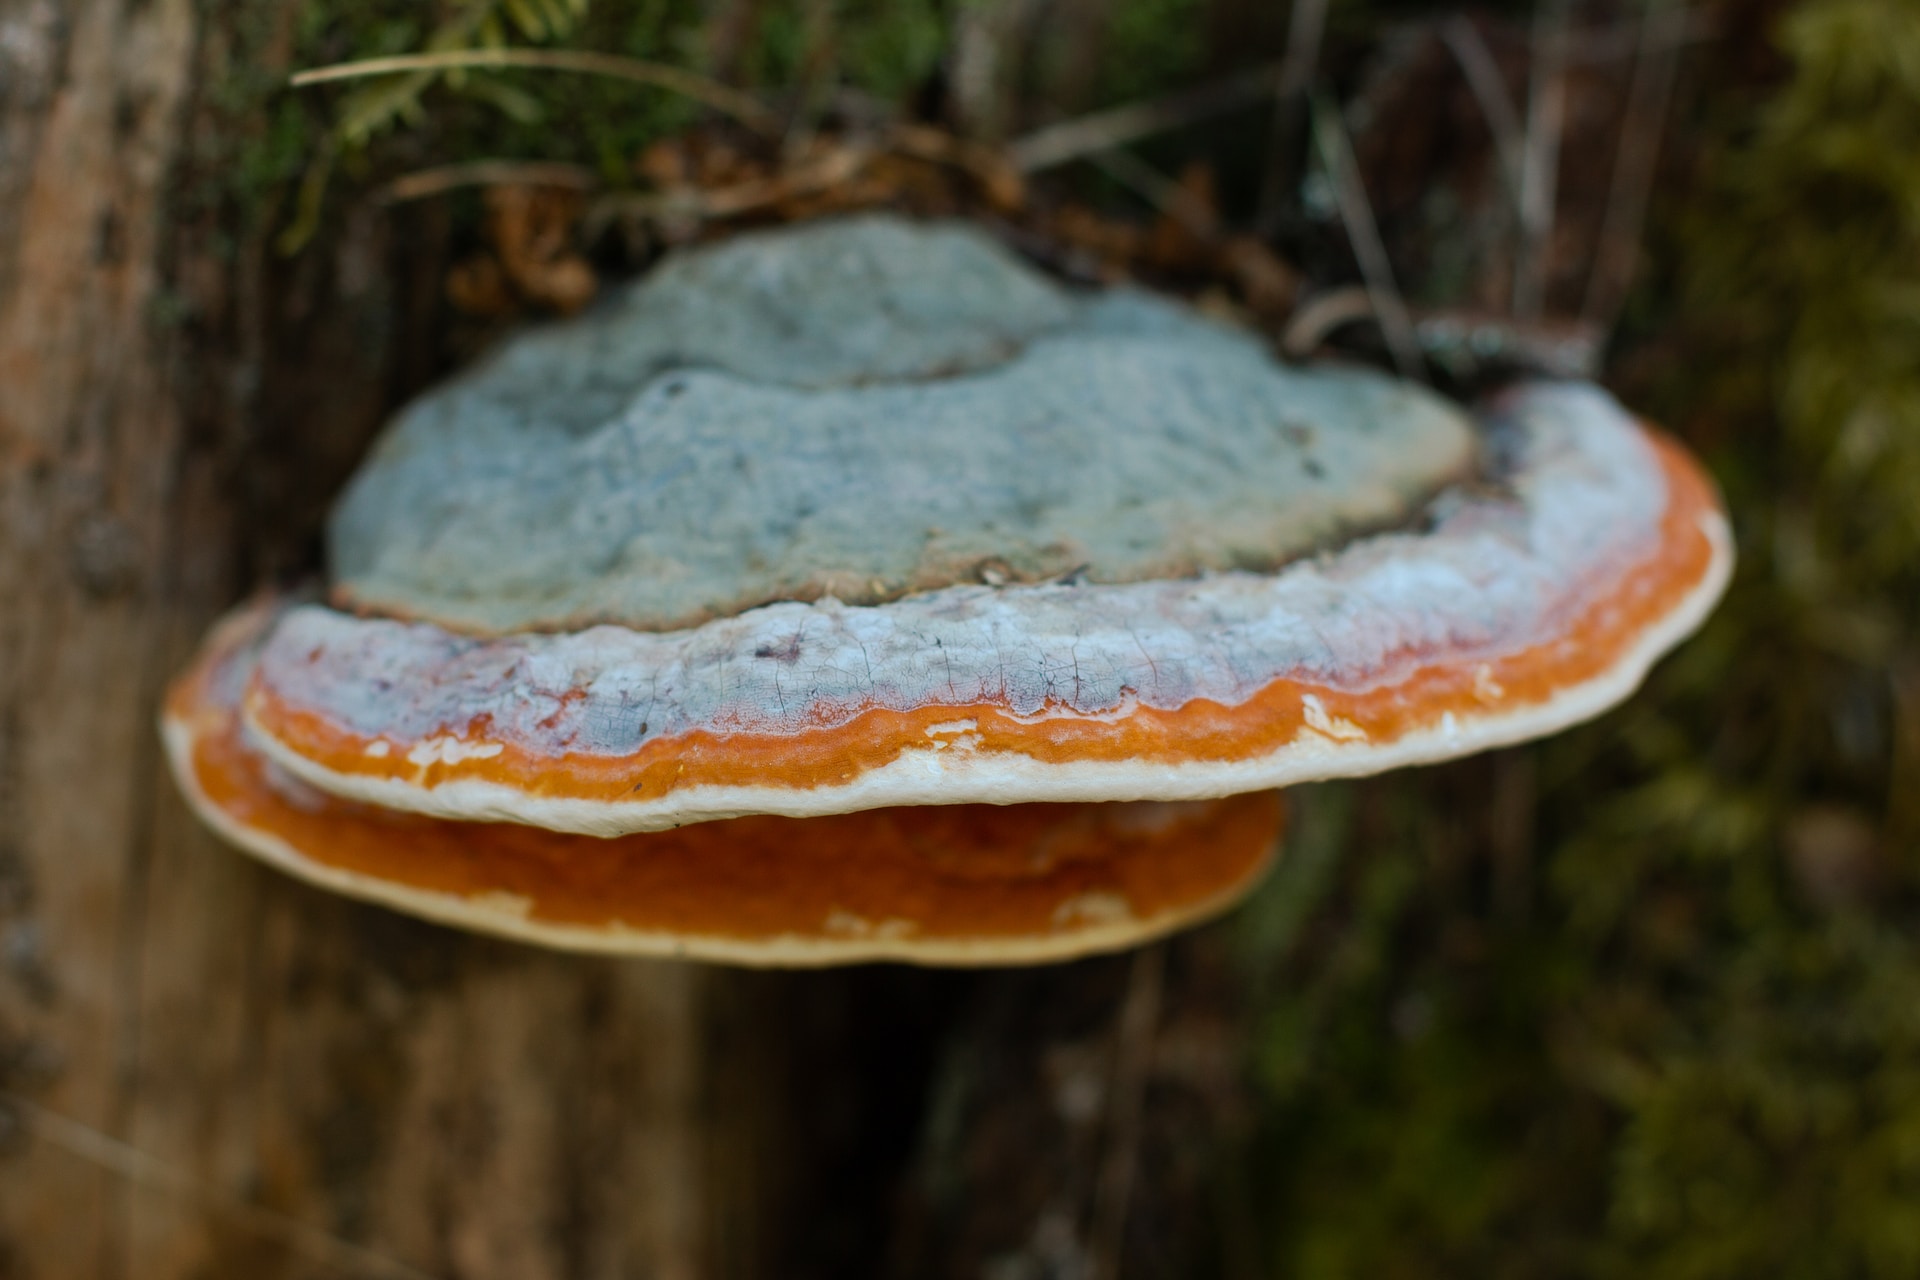 Potential risks and benefits of Chaga mushroom